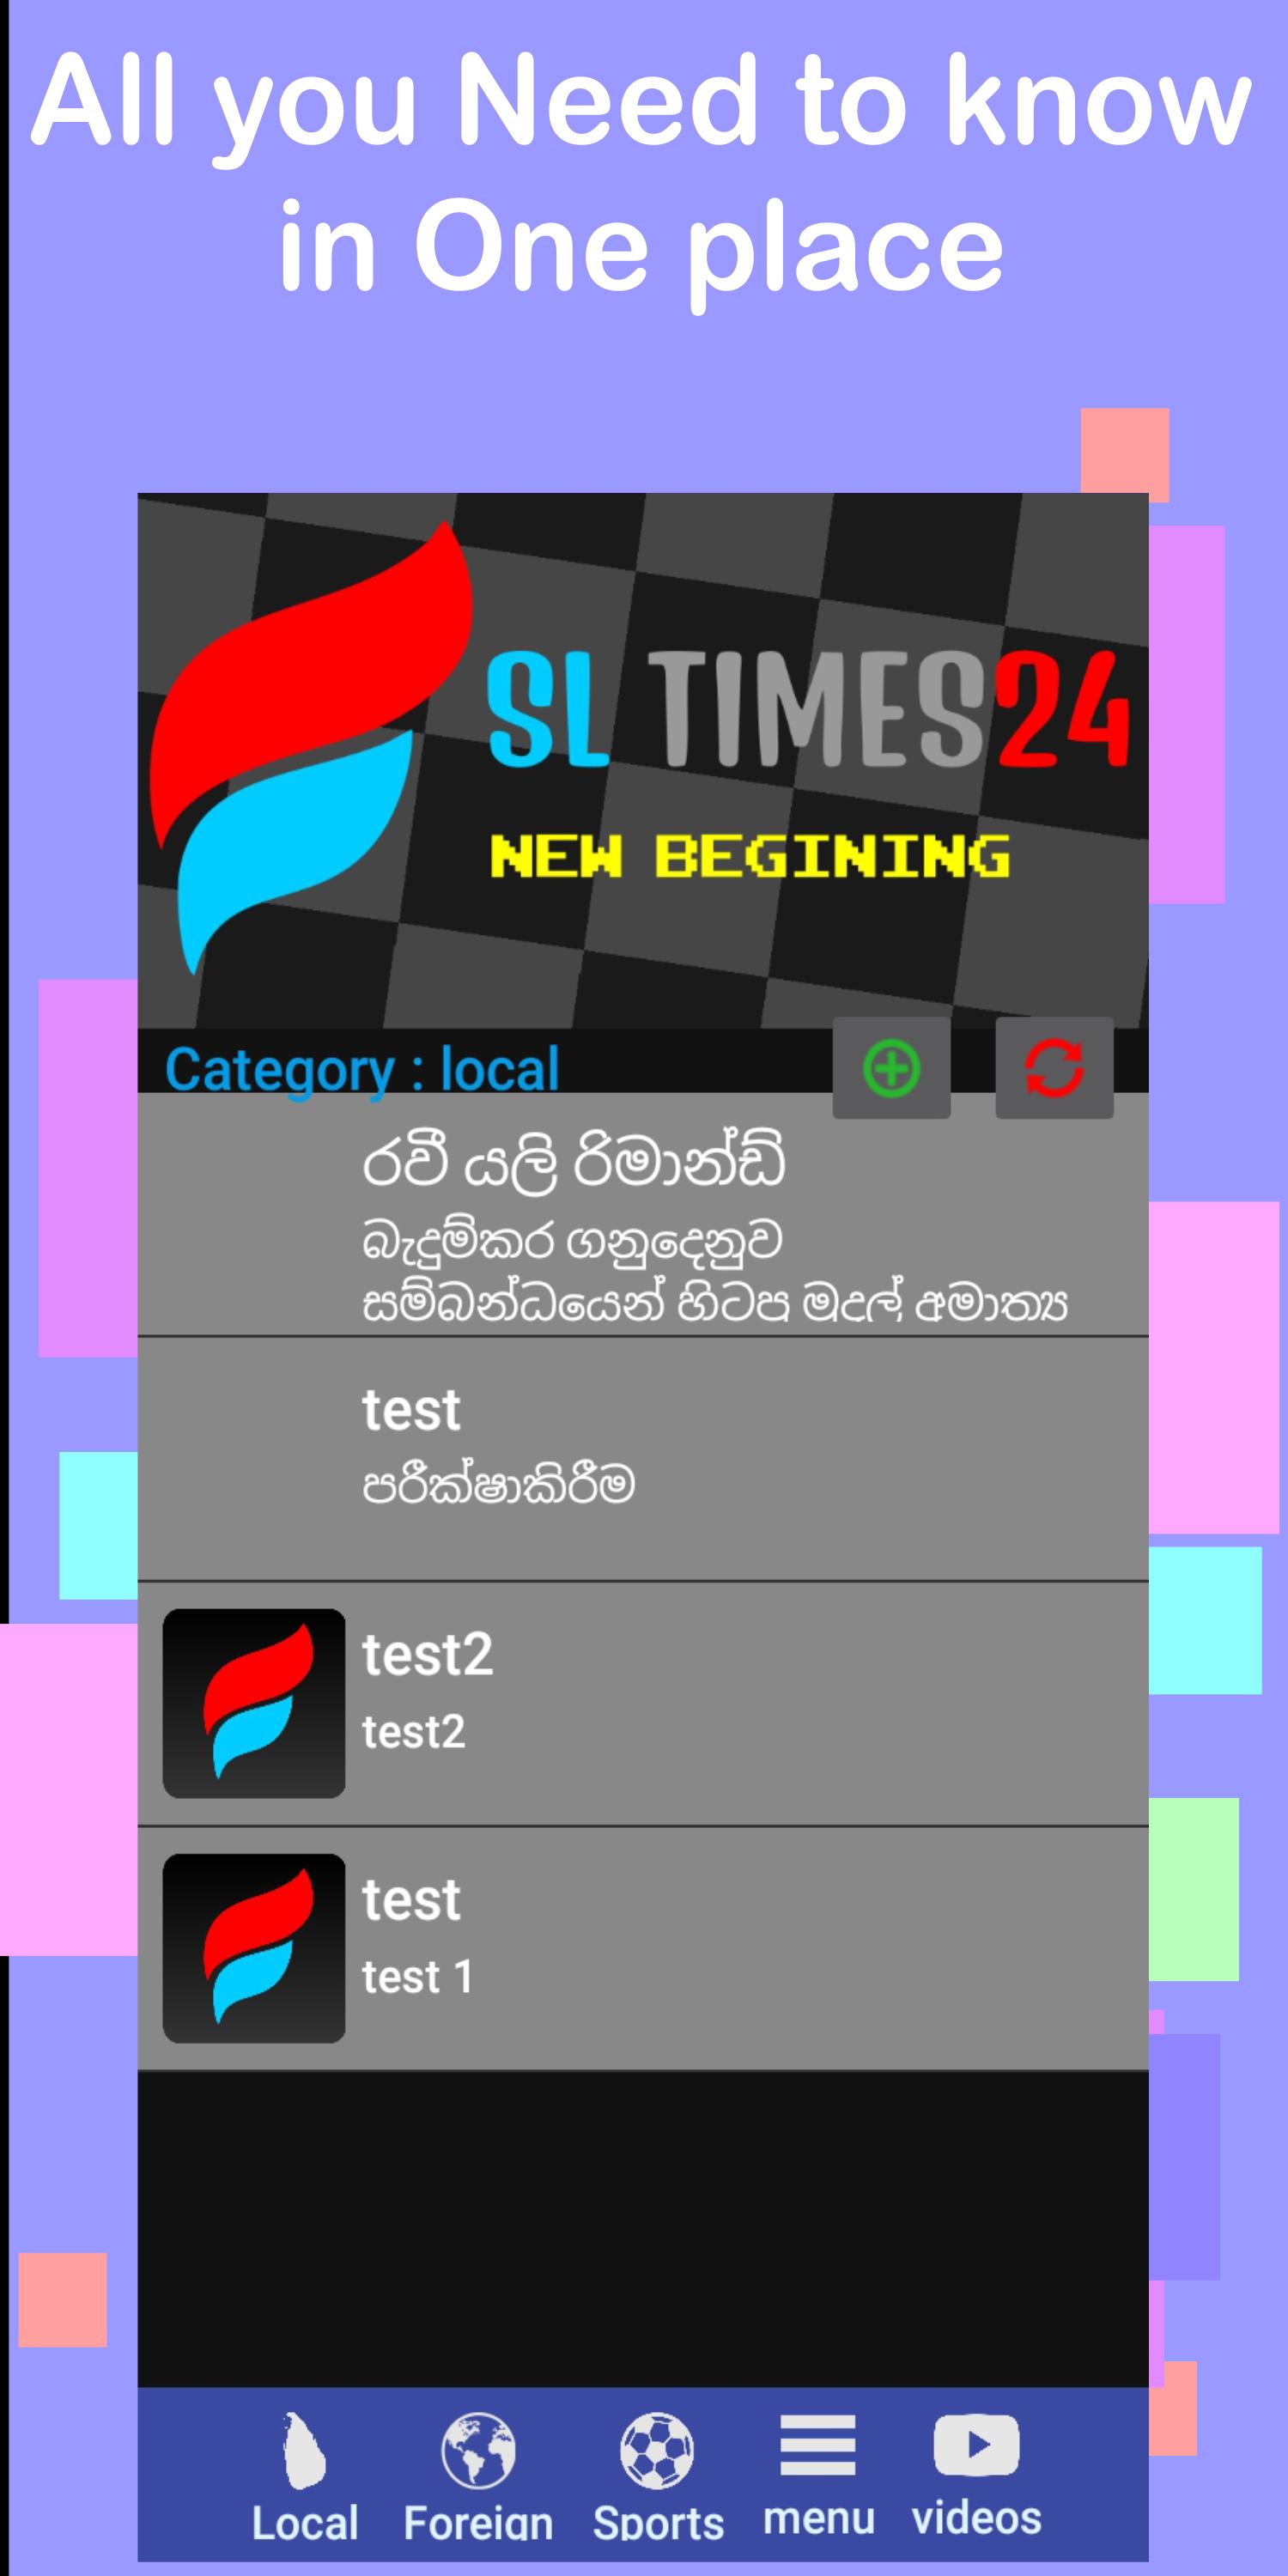 SL Times - Sri Lankan News (Sinhala News App) for Android - APK Download